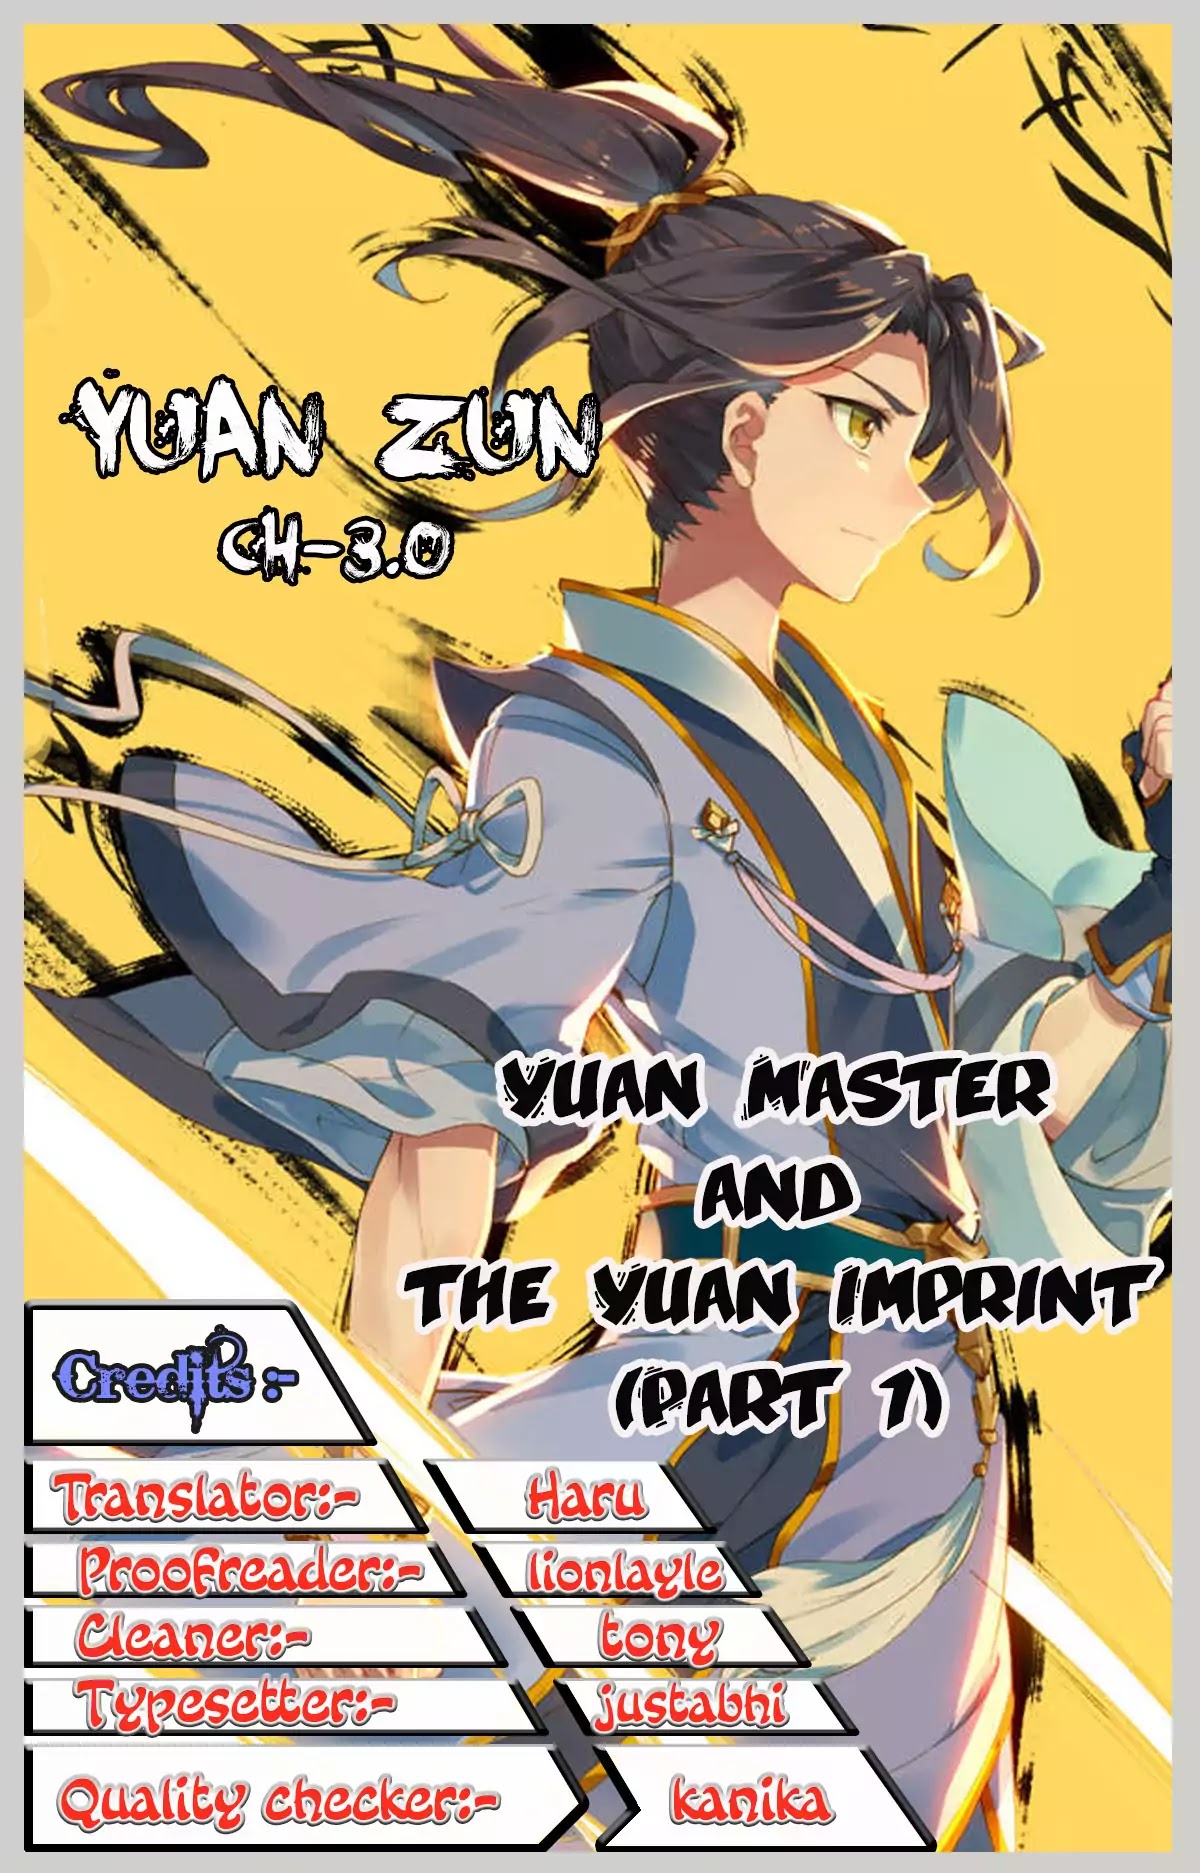 The 1 page of Yuan Zun comic chapter 3